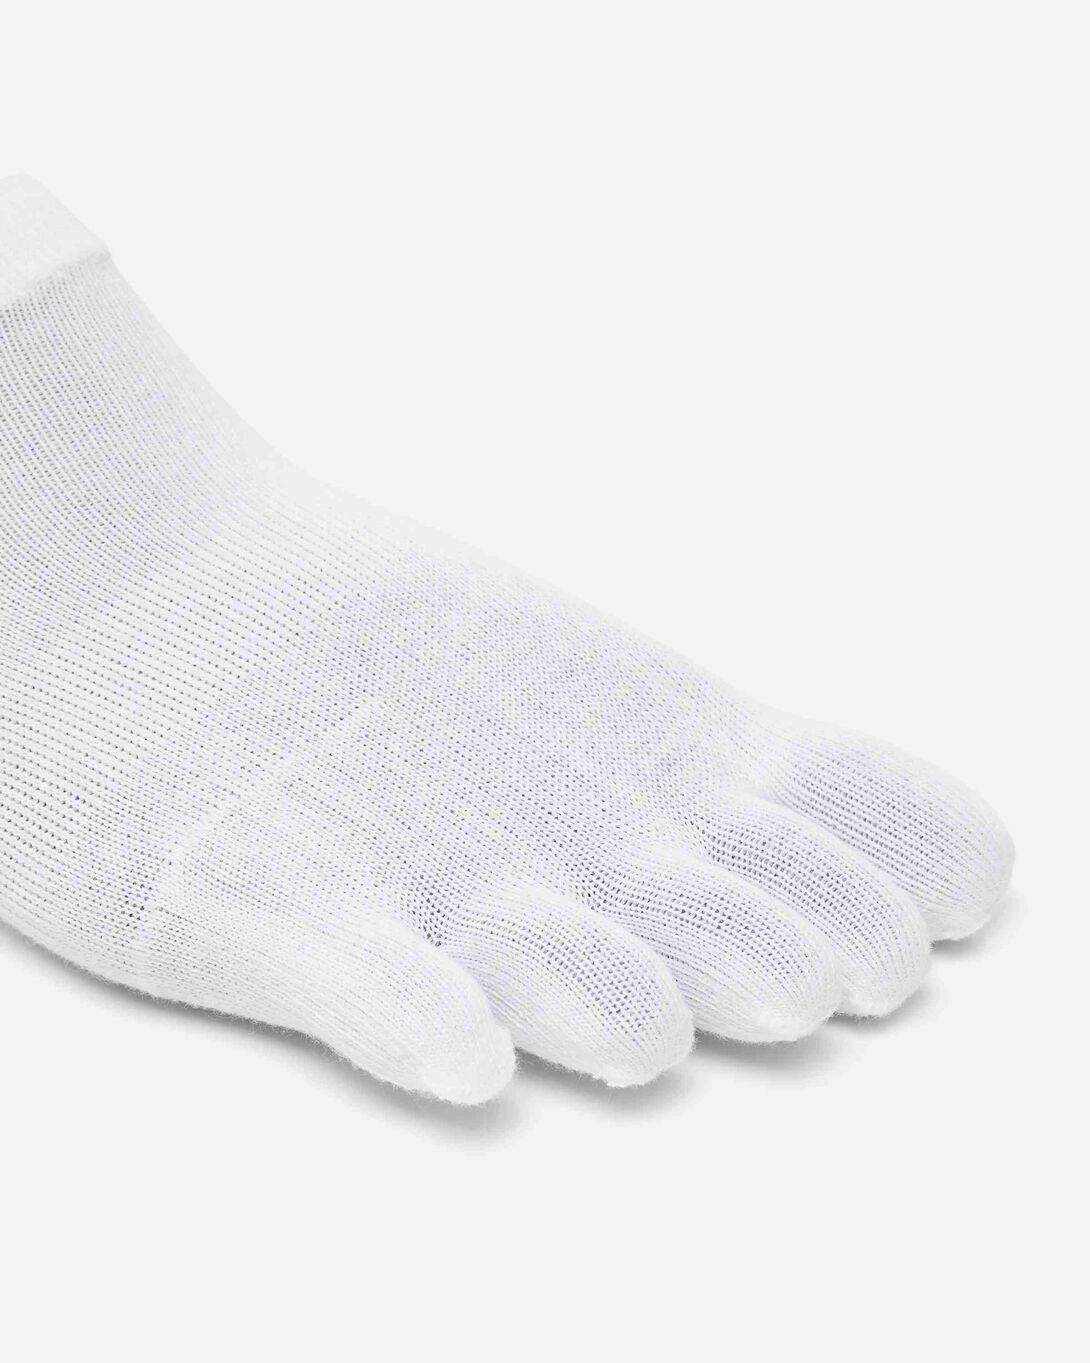 Men's Five Finger Socks Five Toe Socks Sports Socks, White-1